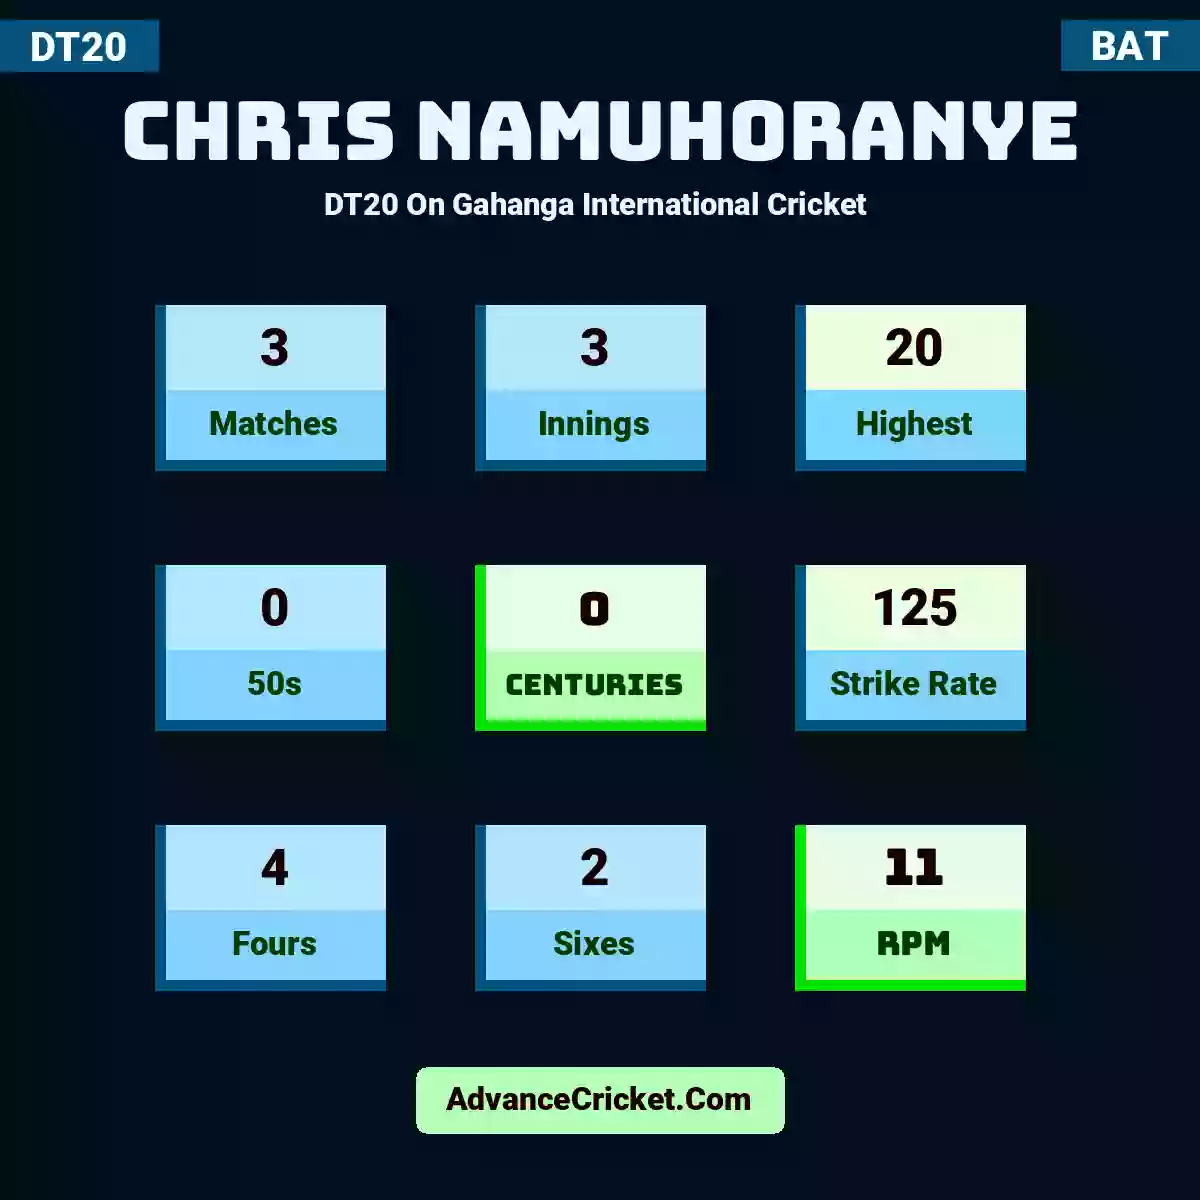 Chris Namuhoranye DT20  On Gahanga International Cricket , Chris Namuhoranye played 3 matches, scored 20 runs as highest, 0 half-centuries, and 0 centuries, with a strike rate of 125. C.Namuhoranye hit 4 fours and 2 sixes, with an RPM of 11.